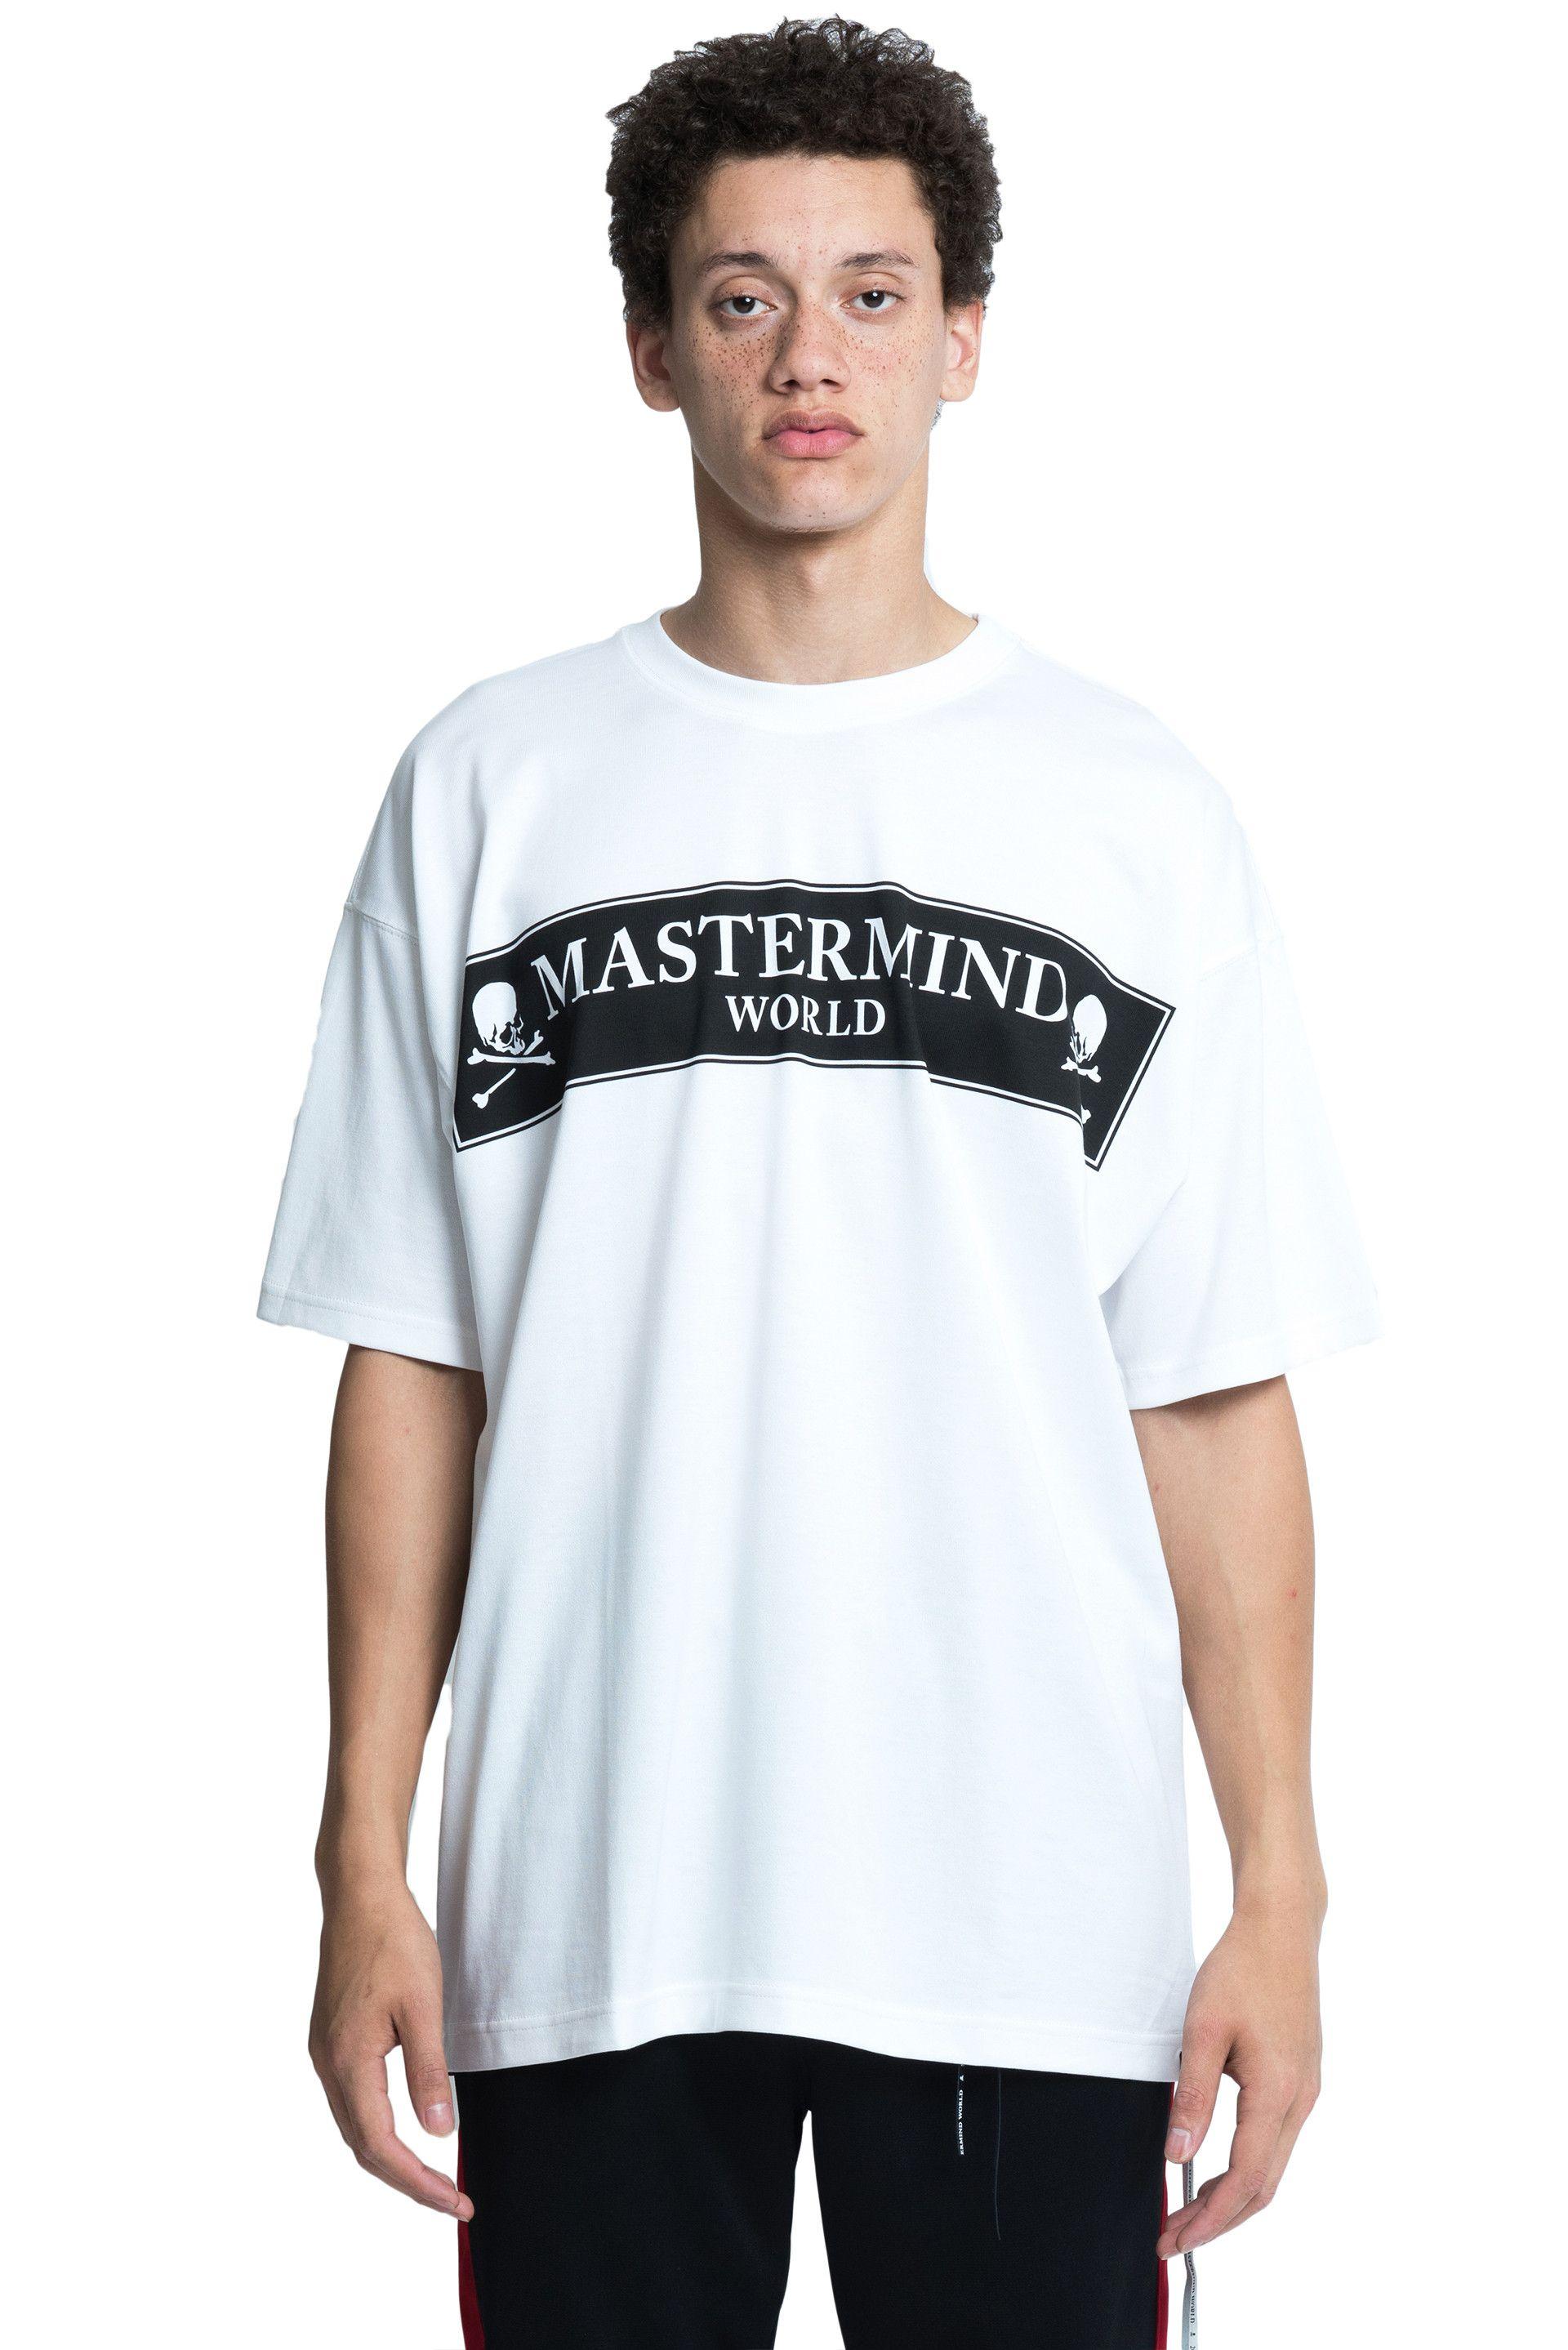 White Box Logo - Mastermind World White Box Logo T-shirt , AW18 - UJNG